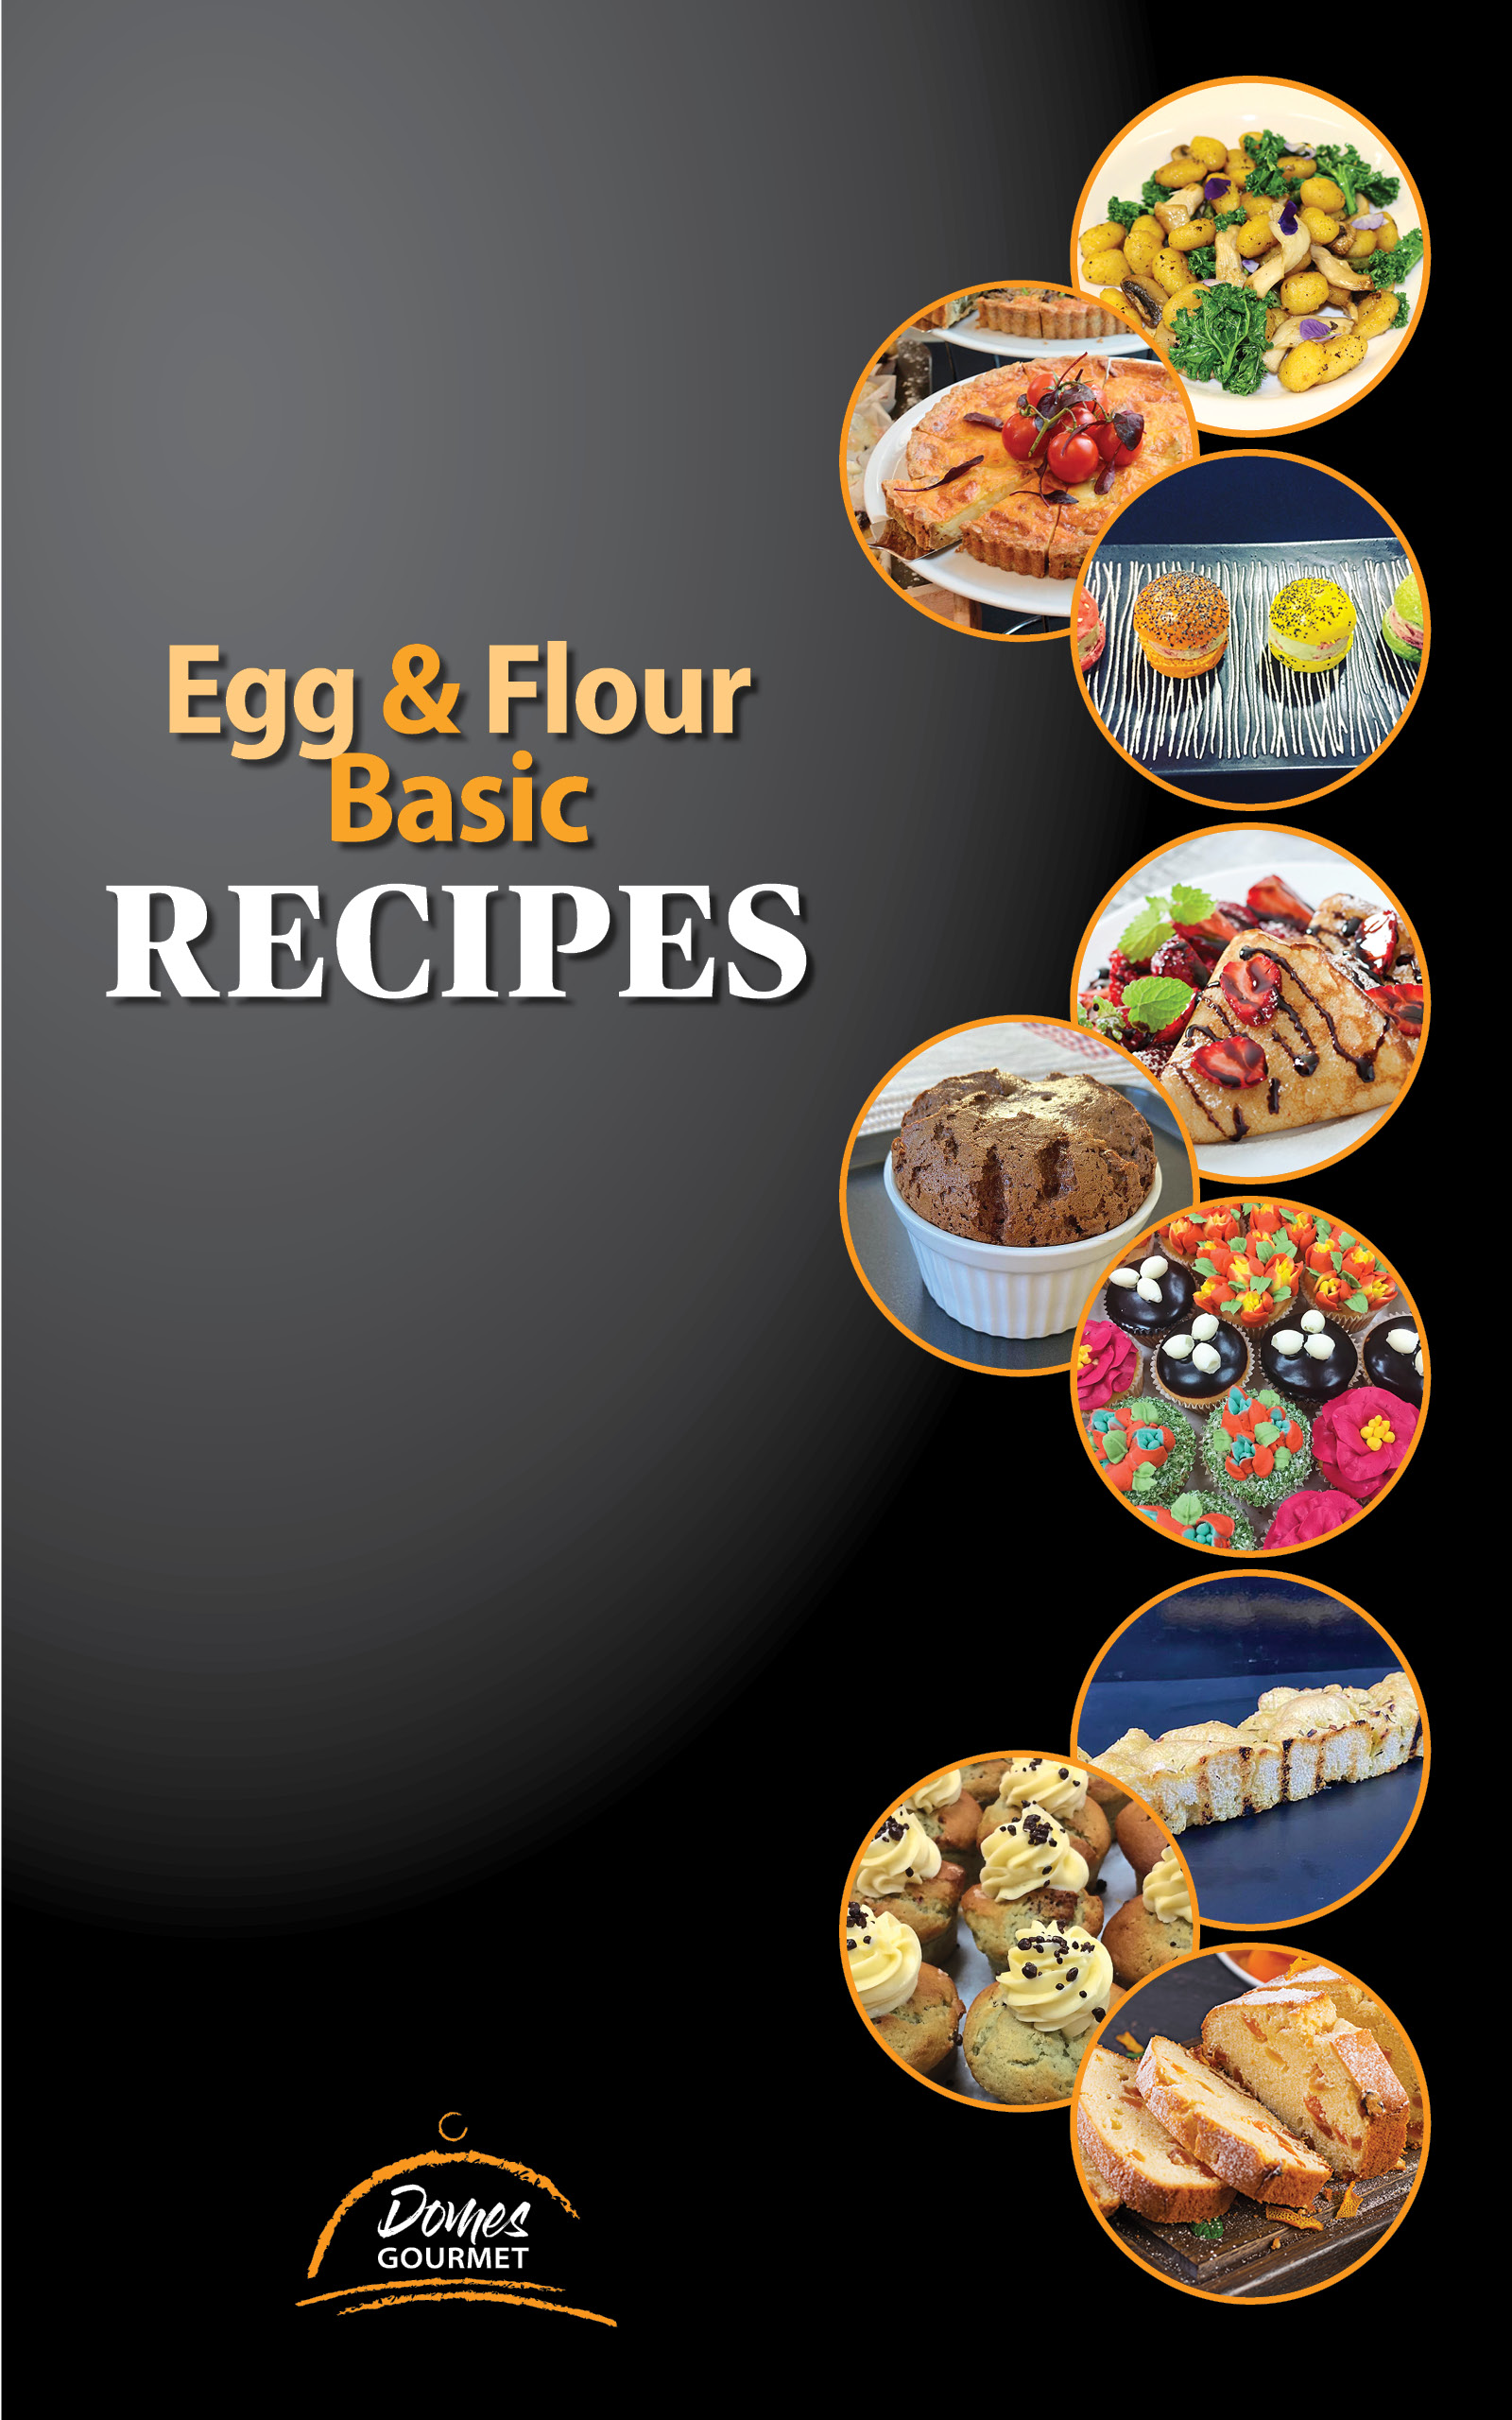 FREE: Egg & Flour Basic Recipe by Dominique Heitz